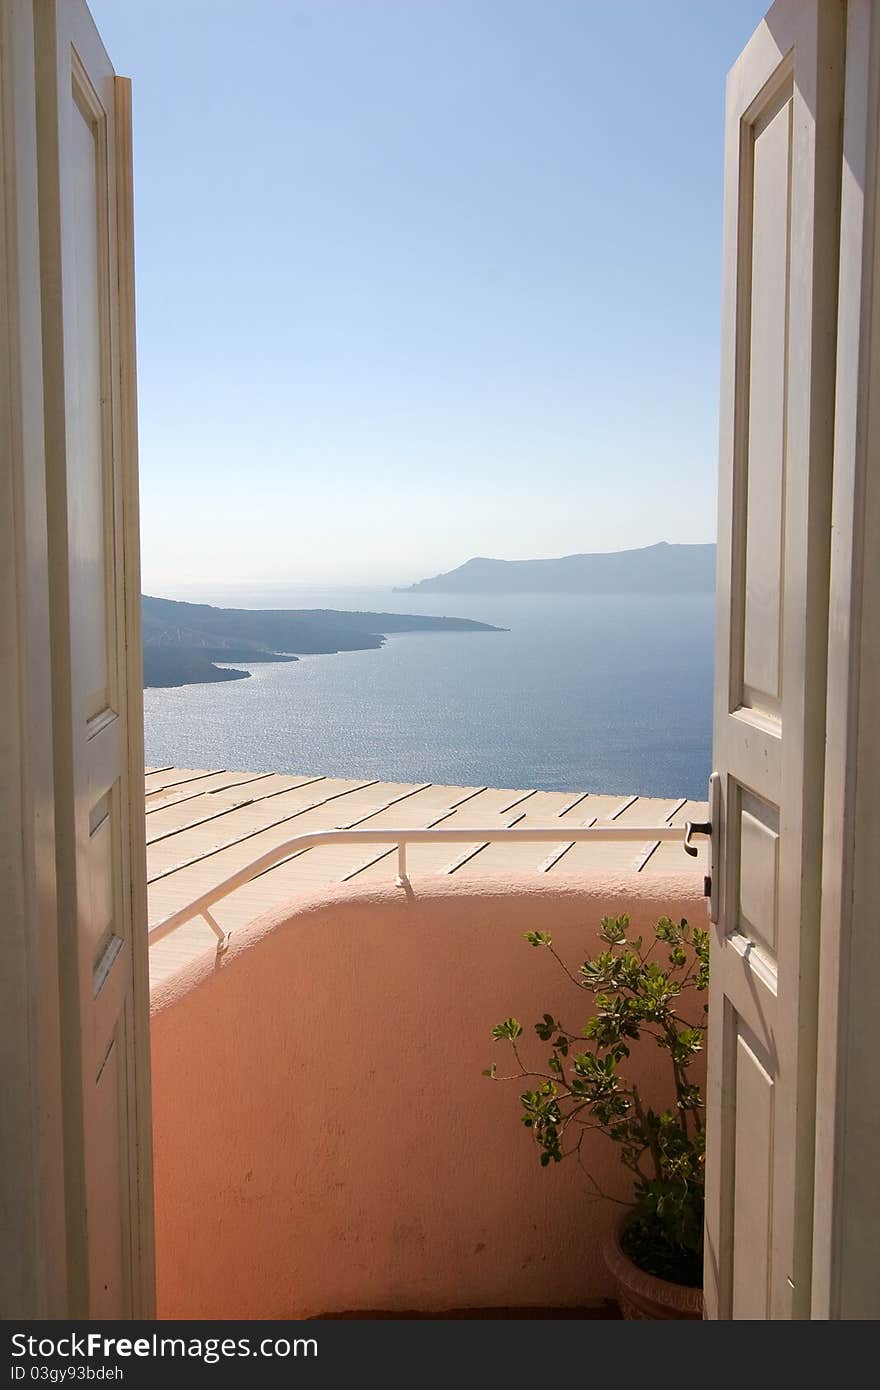 The door on the sea - Thira (Fira) - Santorini Island- Greece